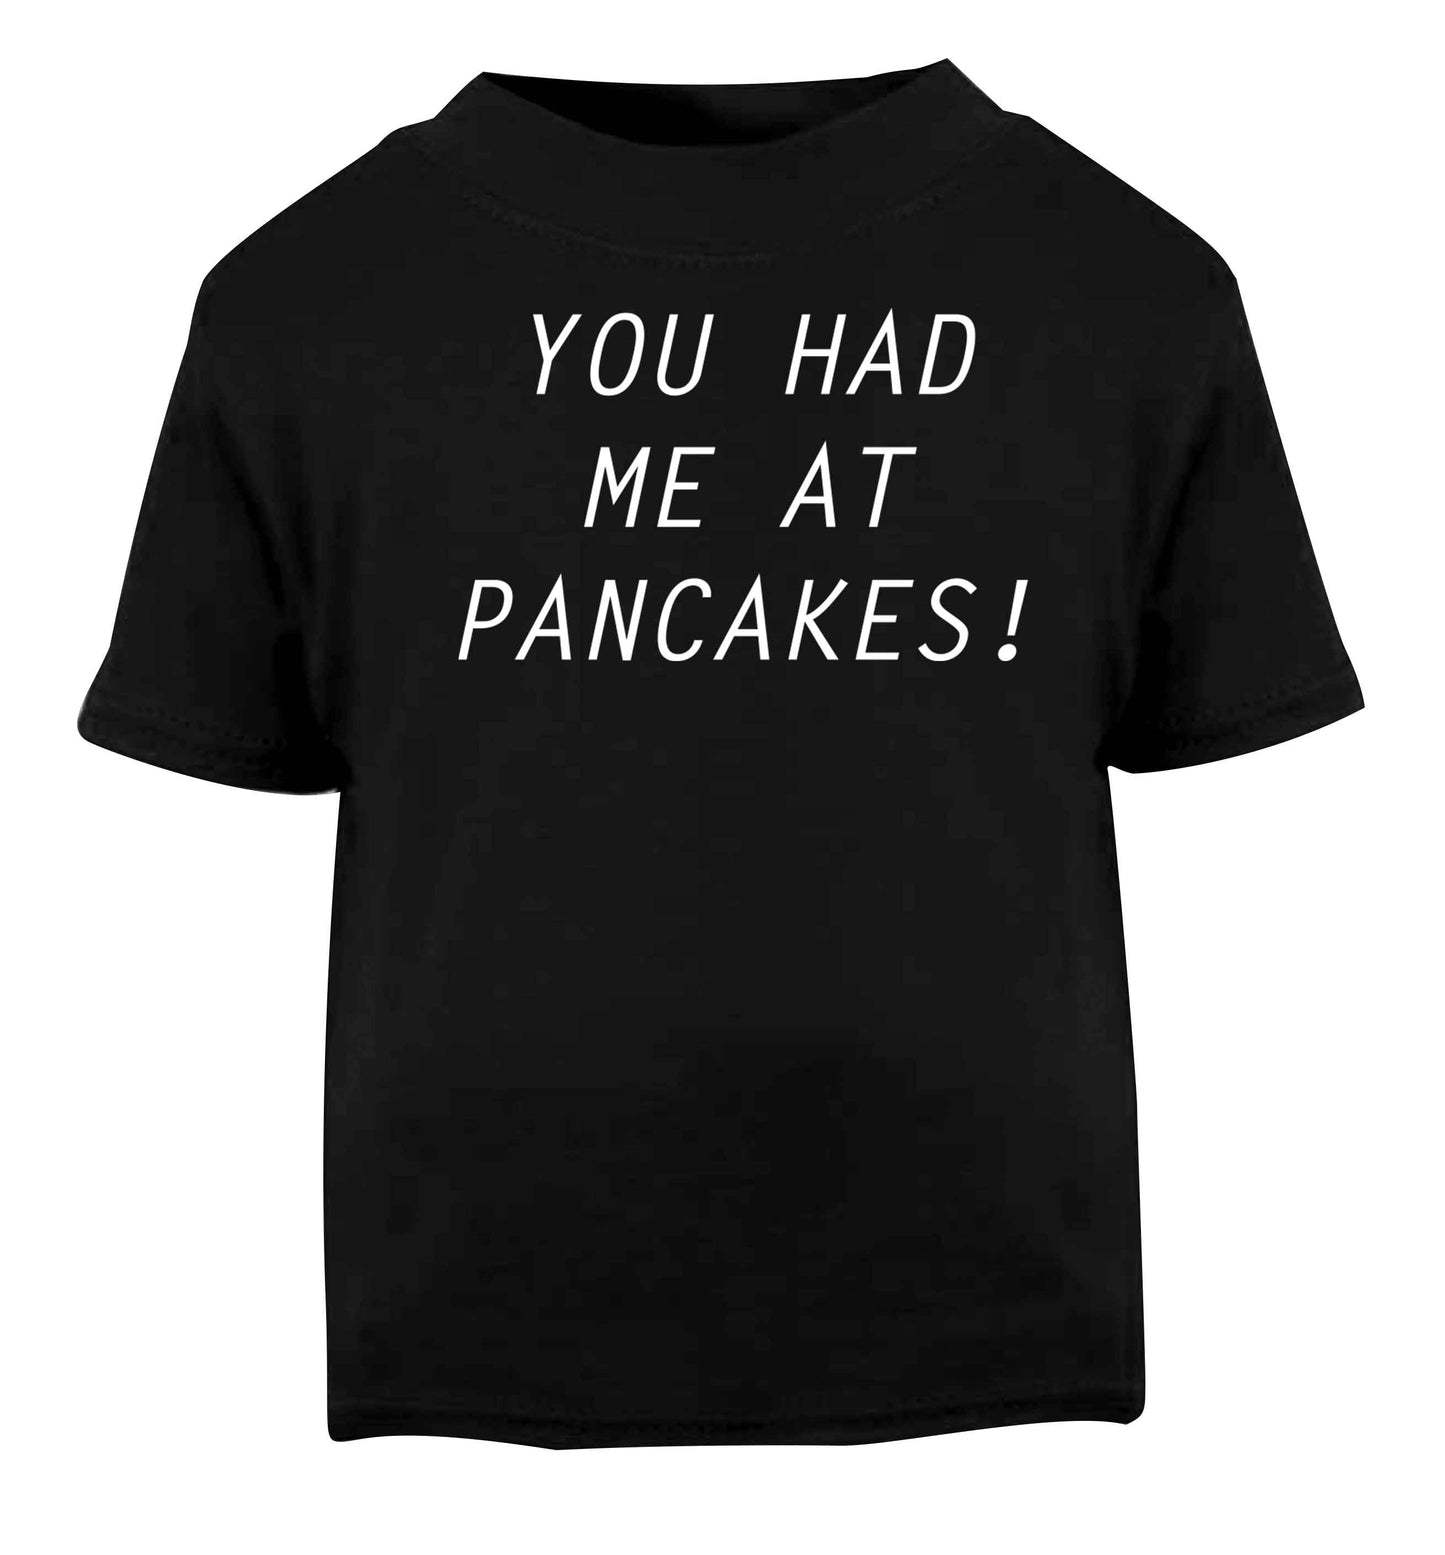 You had me at pancakes Black baby toddler Tshirt 2 years